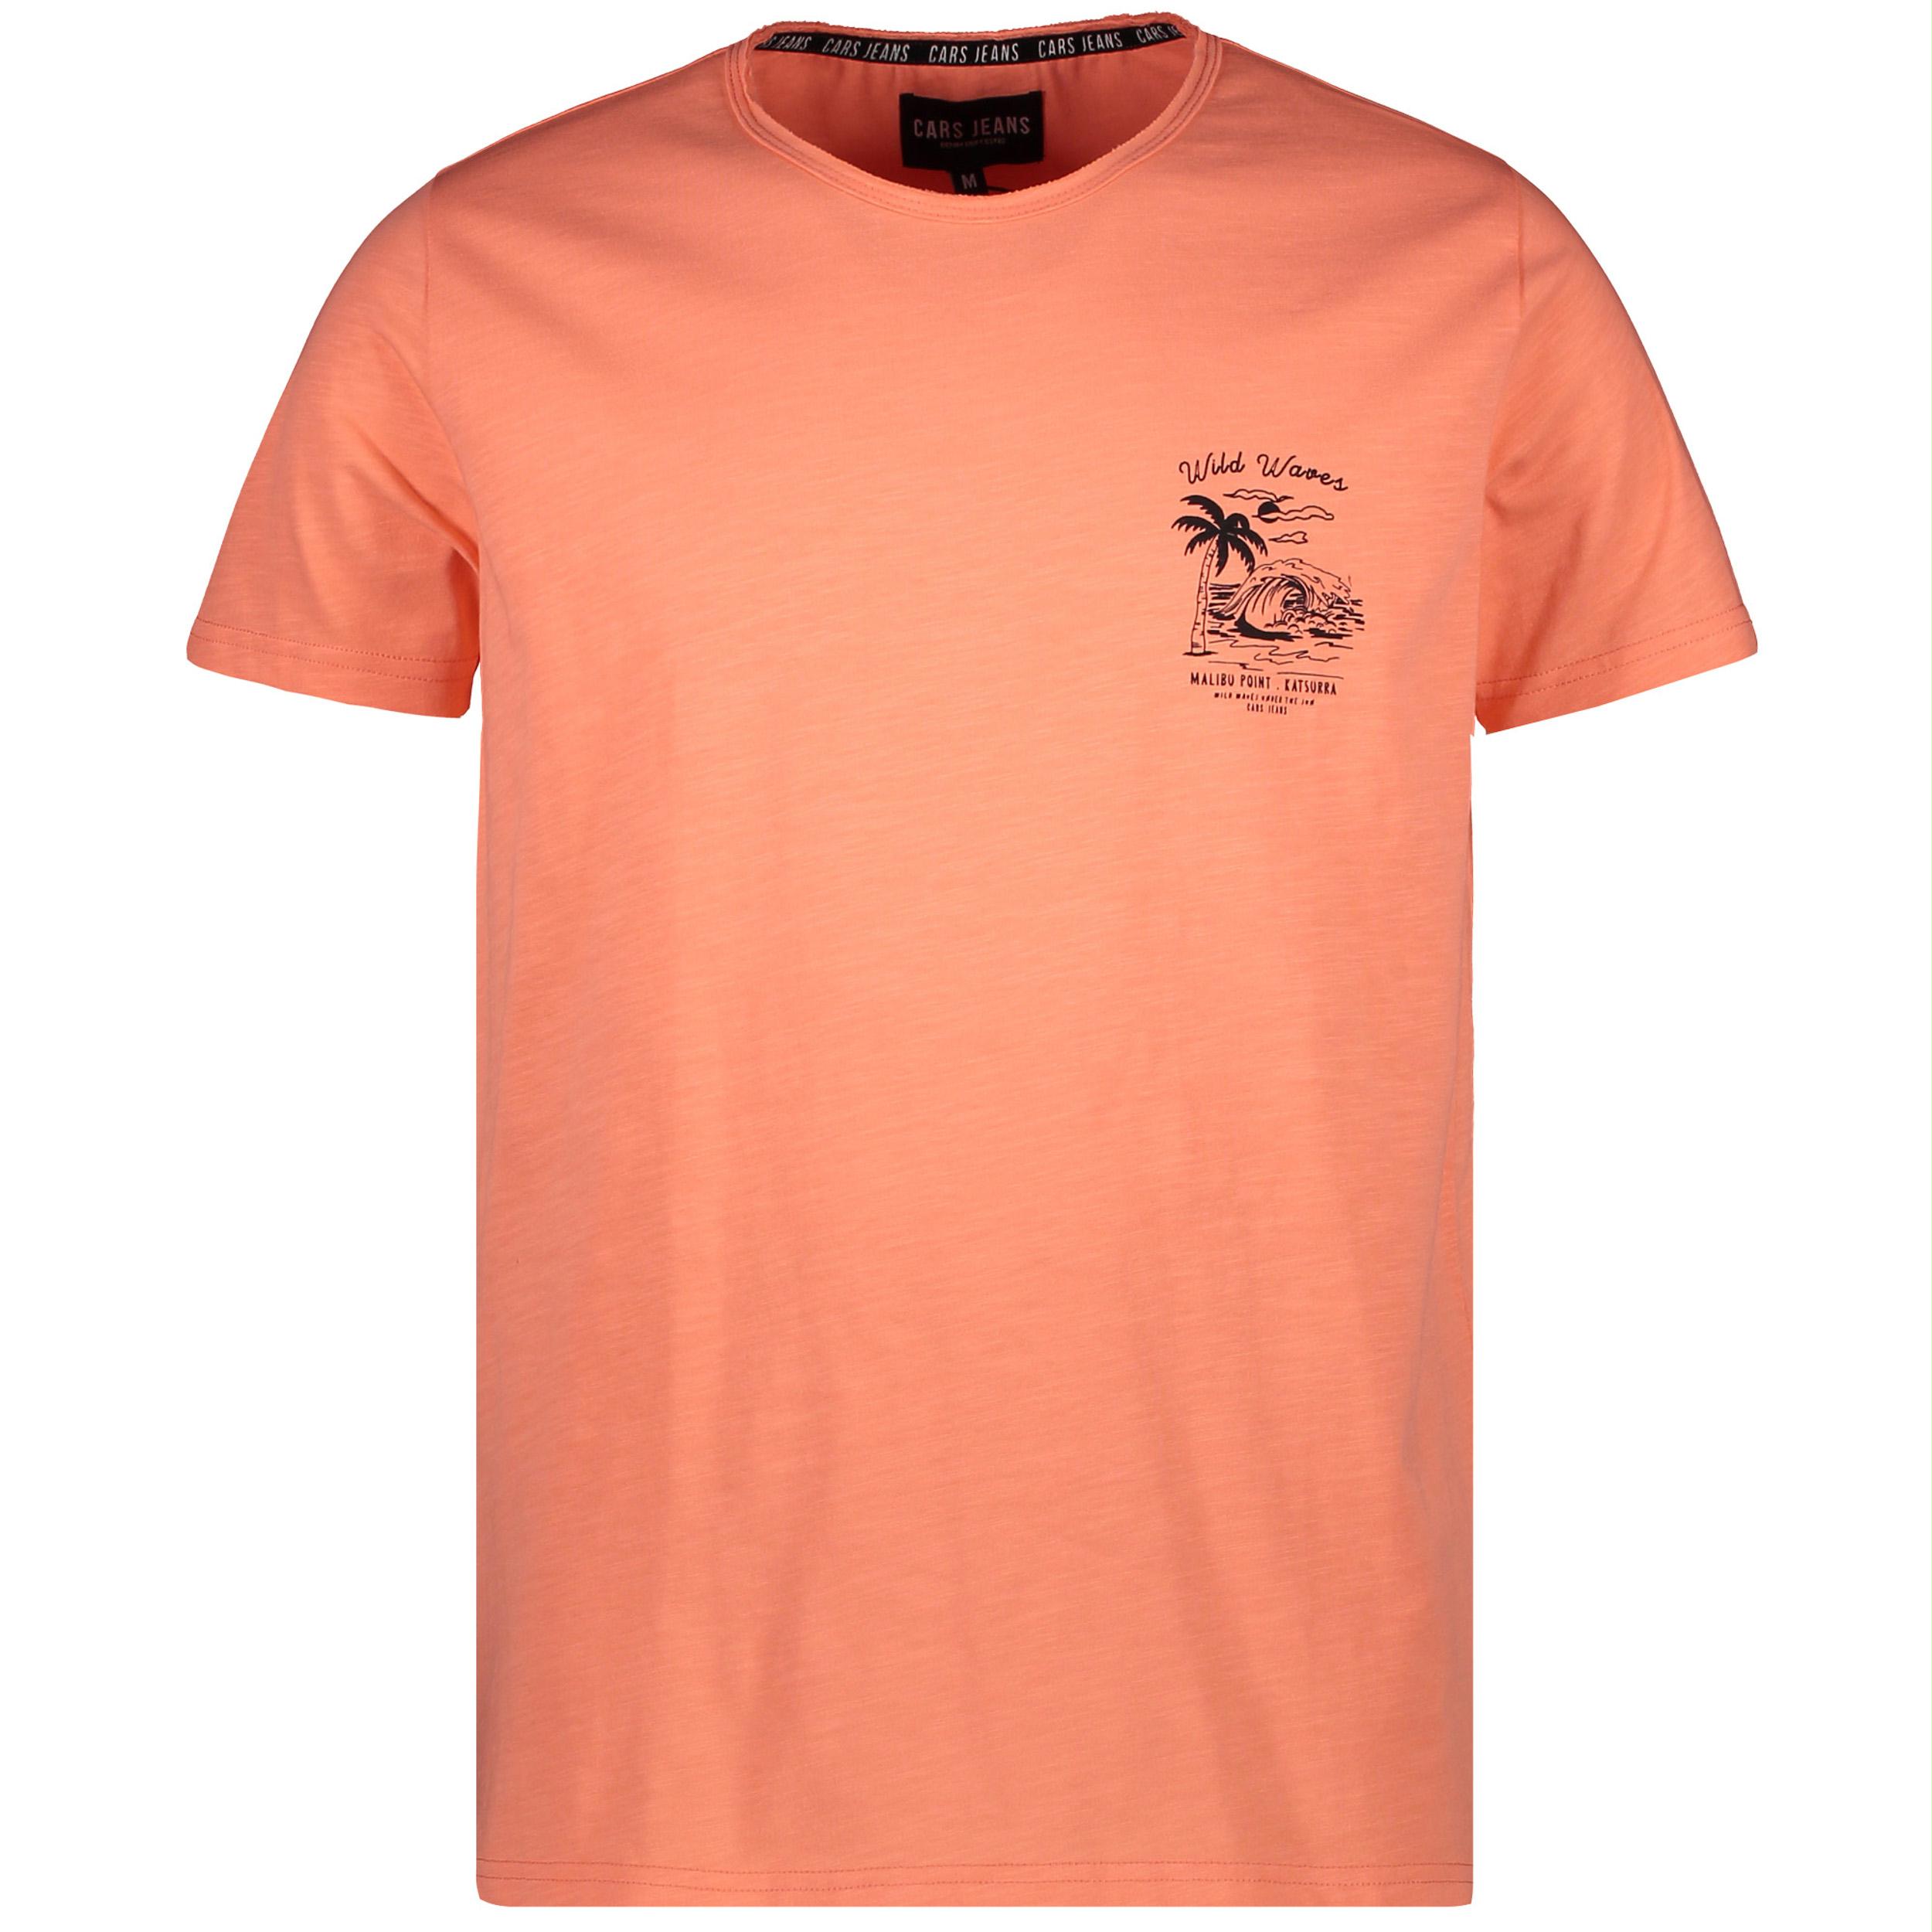 Cars Jeans T-shirt korte mouw Oranje Tarran 61882/31